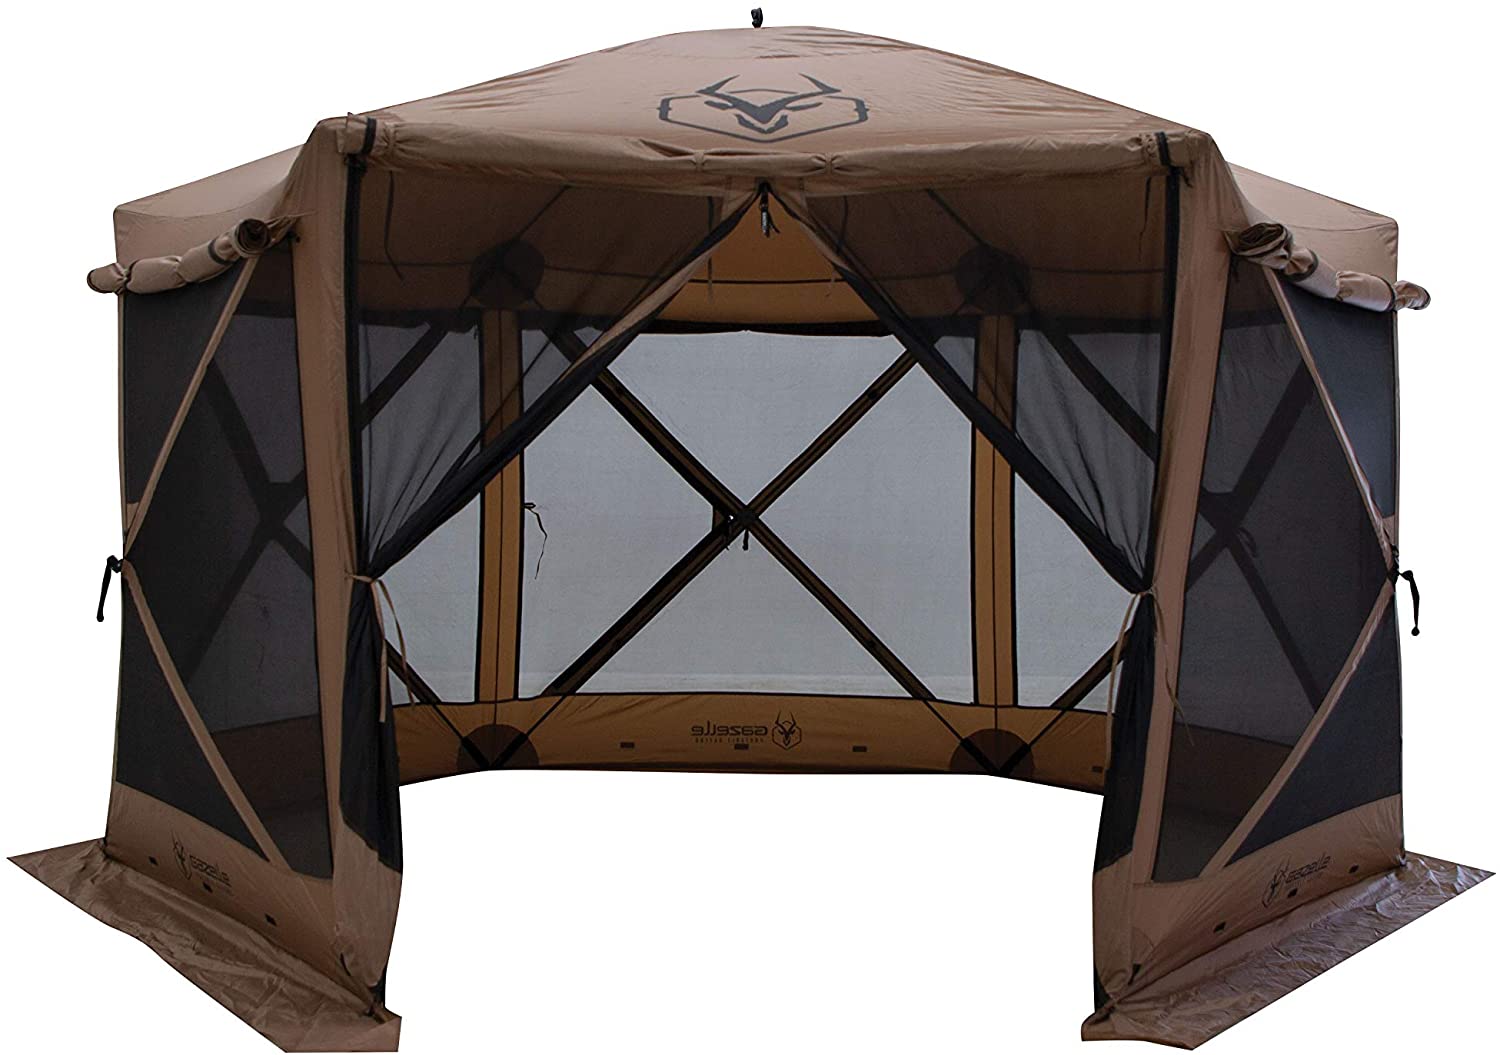 Gazelle Tents G6 Deluxe 6 Sided Hub Gazebo Screen Tent Badlands Brown 124"x124"